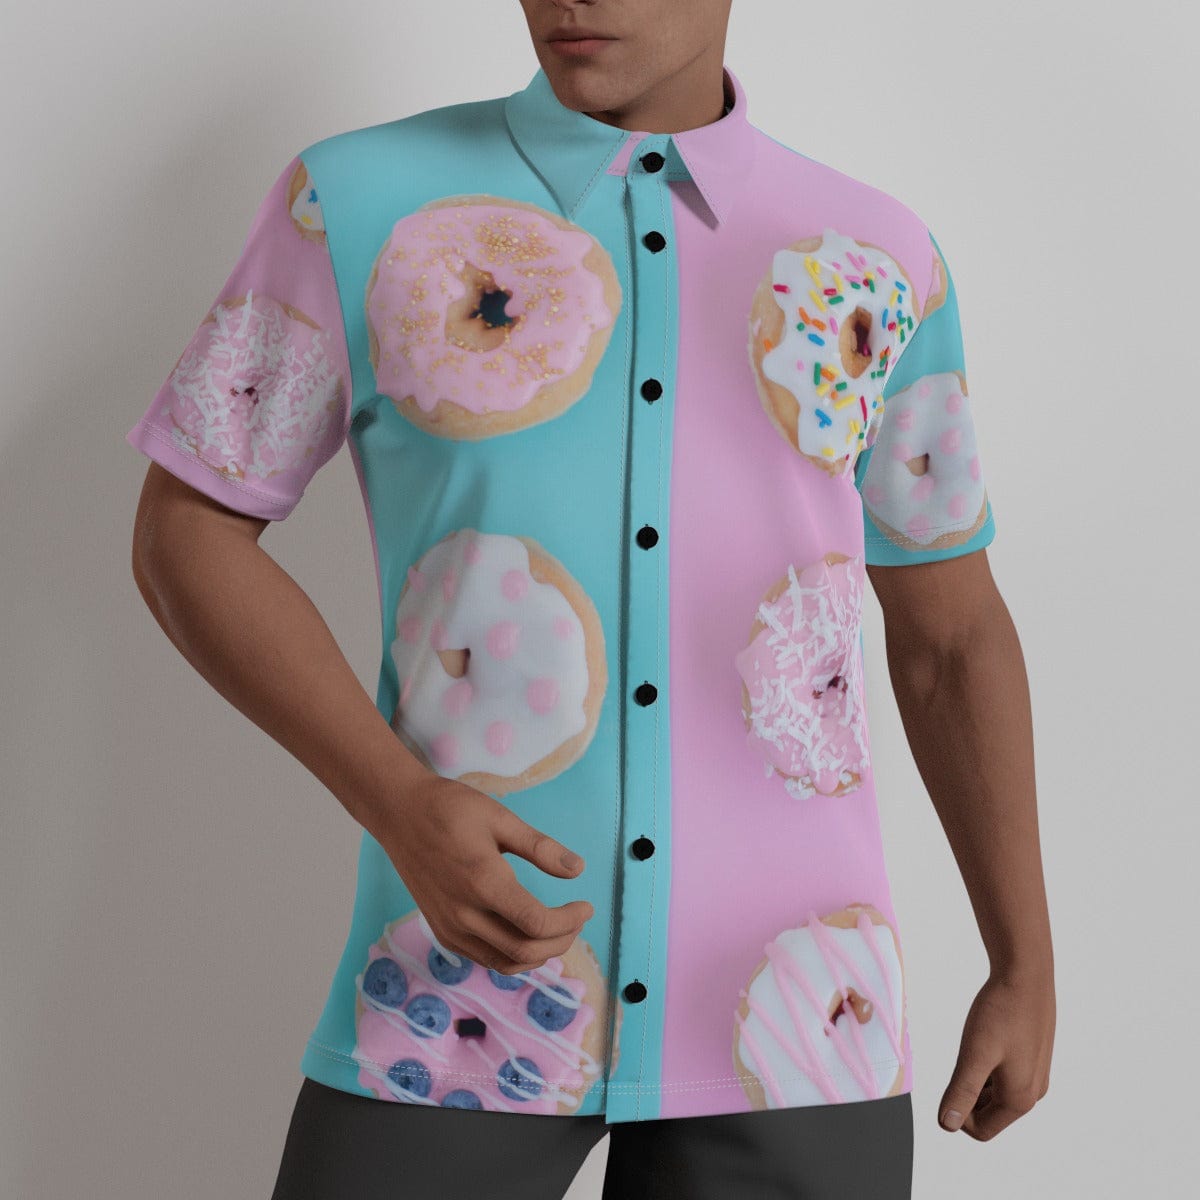 Yoycol 2XL / White Donut Lover's Men's Shirt